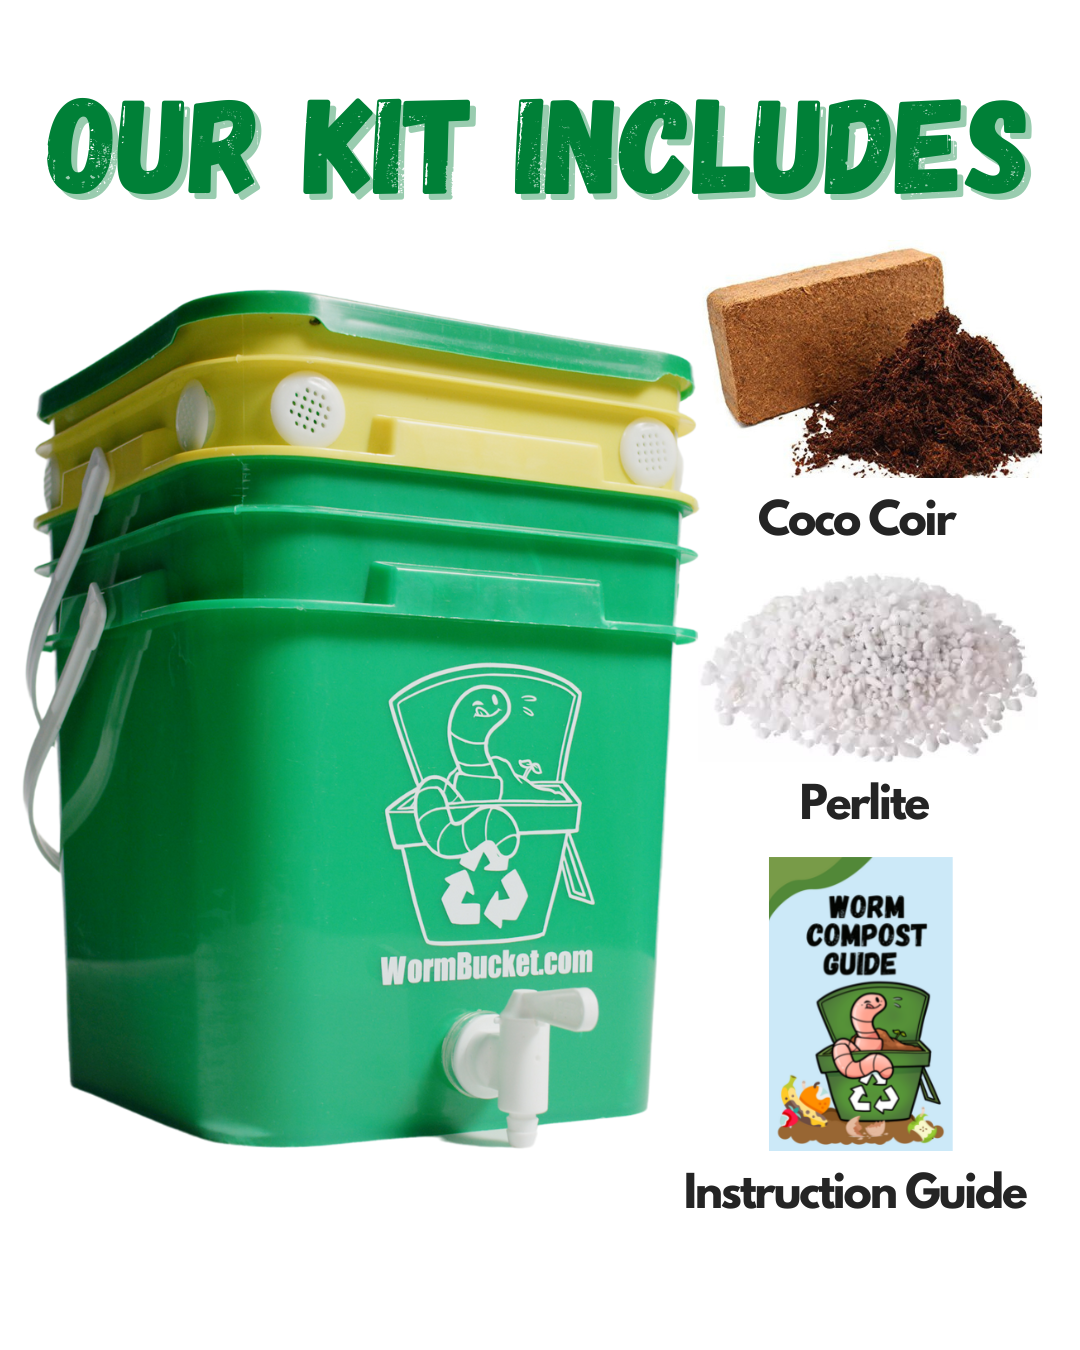 worm compost bin